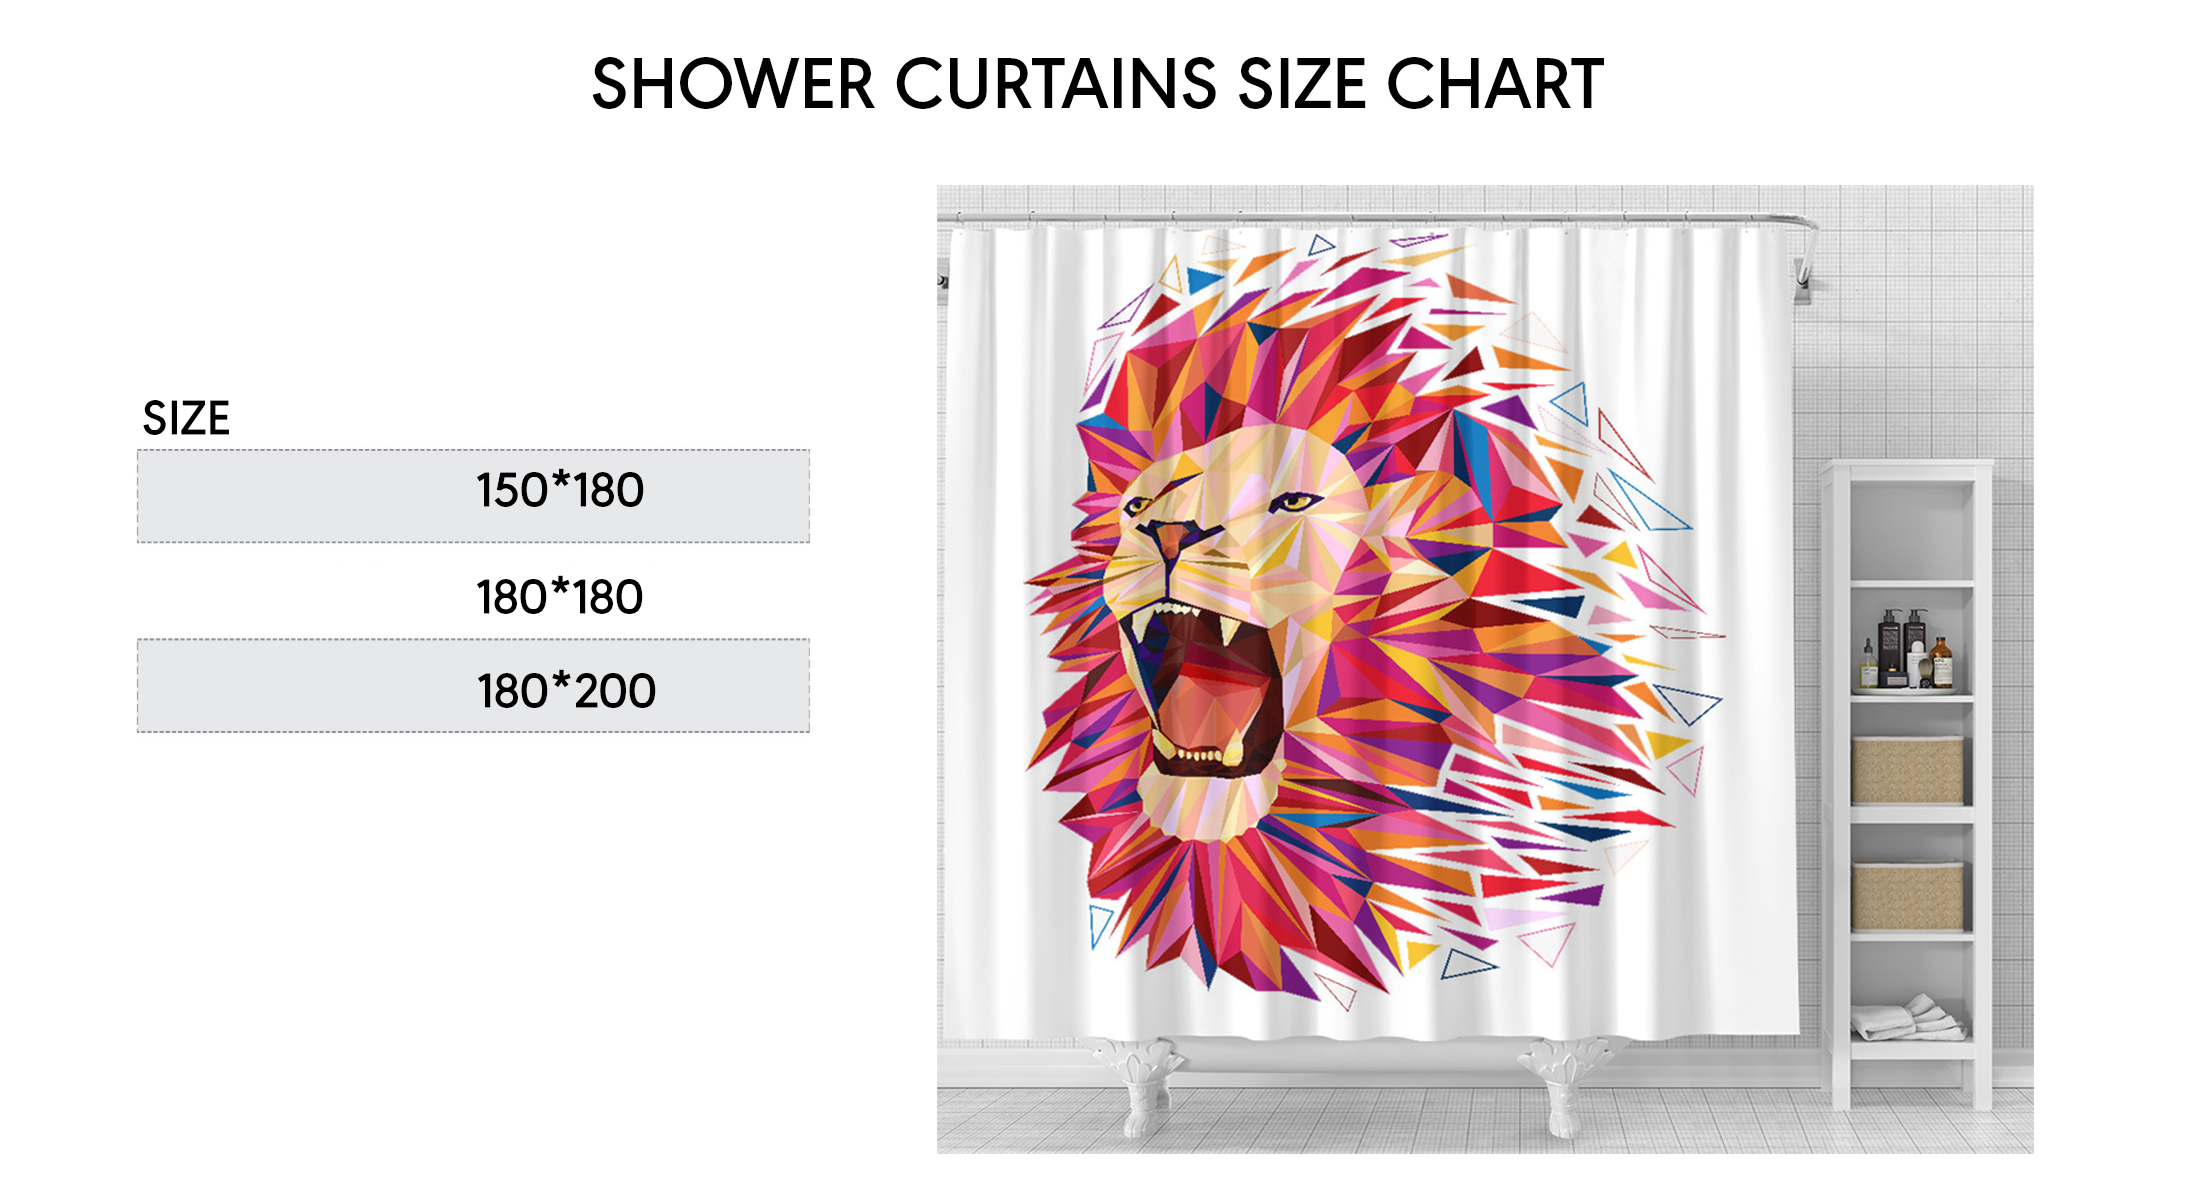 SALE] Louis Vuitton Supreme Fashion Luxury Bathroom Shower Curtain